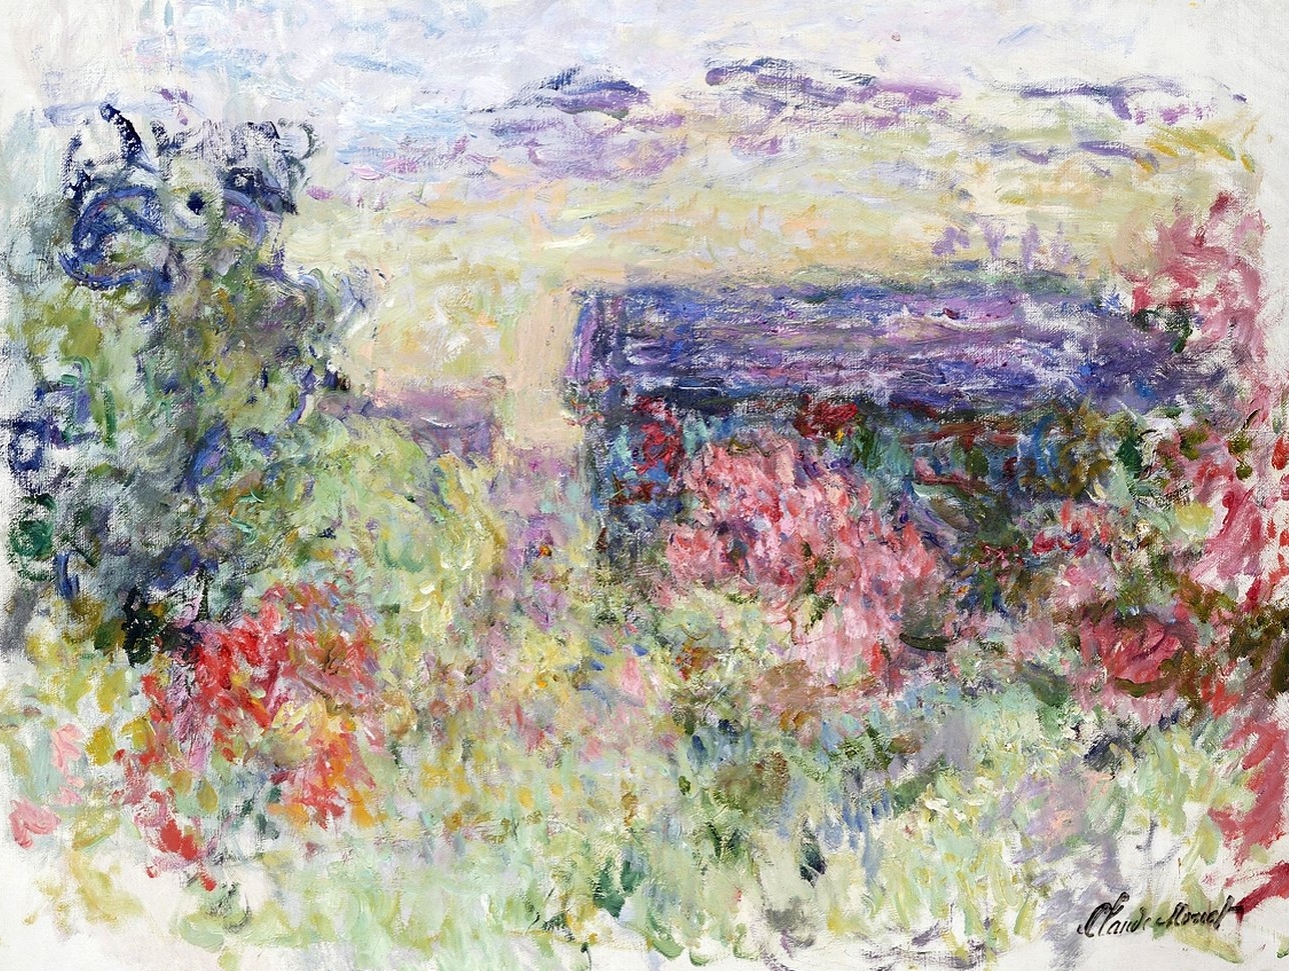 Claude+Monet-1840-1926 (383).jpg